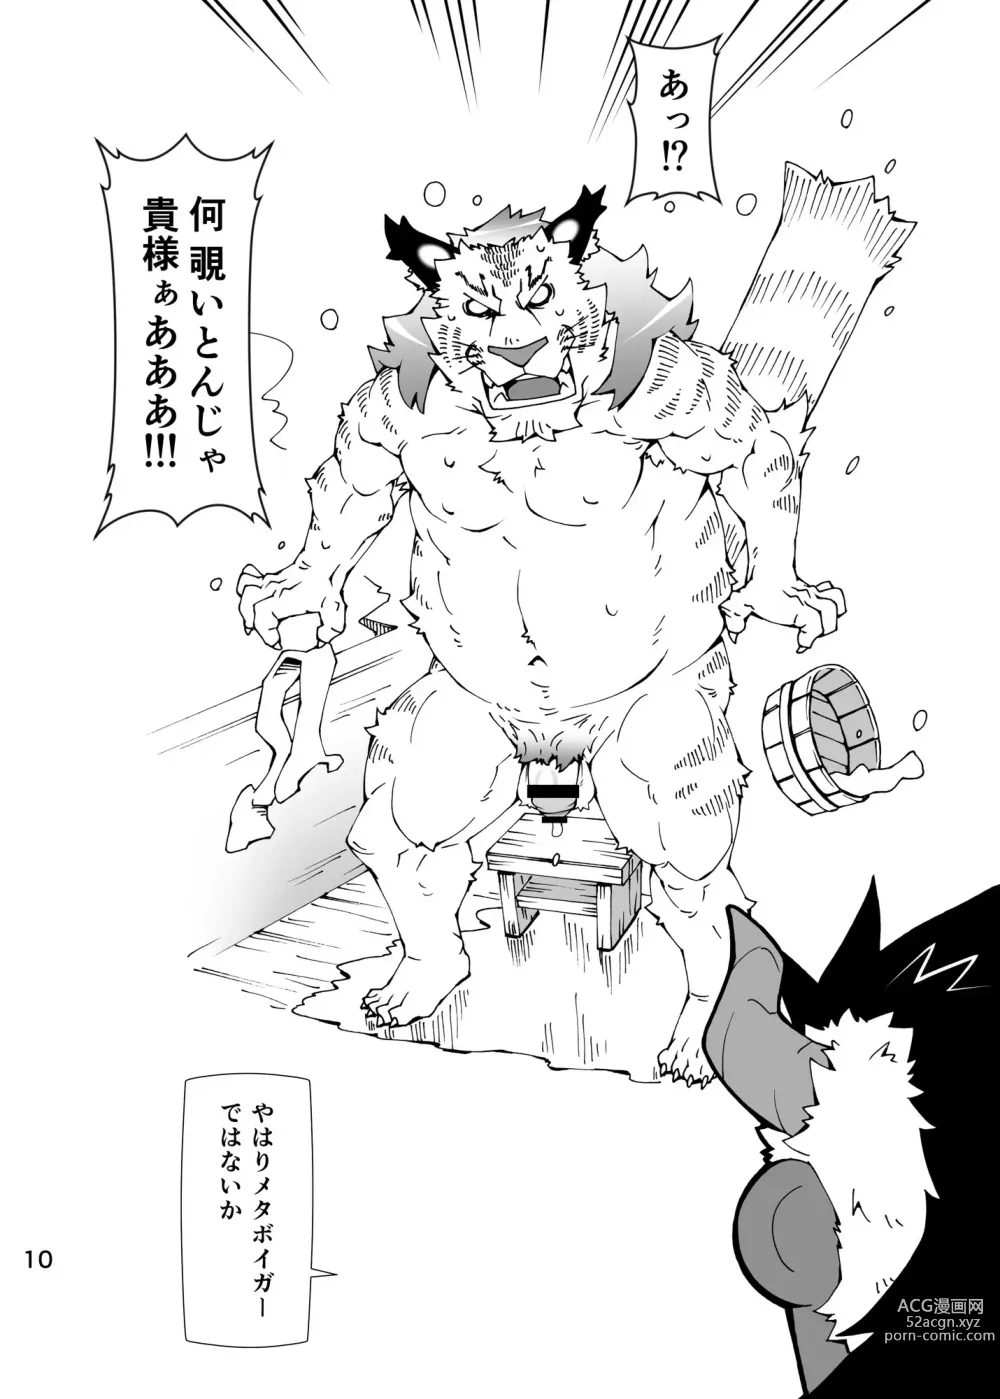 Page 9 of doujinshi NONKEMO GO